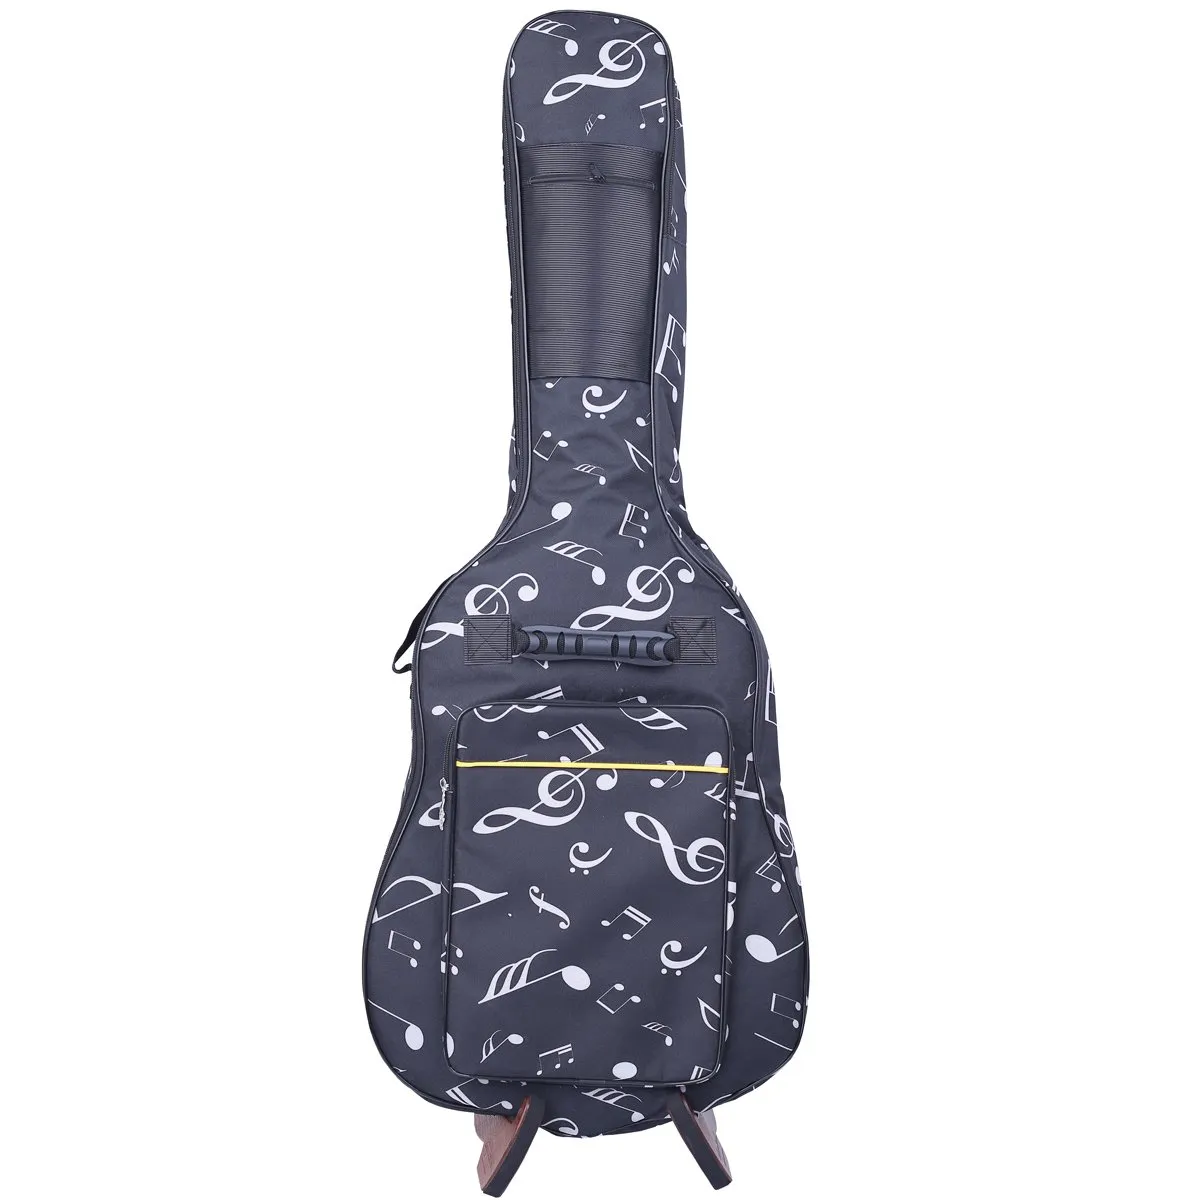 A bolsa impermeável da guitarra de pano de Oxford acolchoou para 39/40/41 "tamanho, cinta de ombro ajustável dobro, elemento da nota, almofada acolchoada